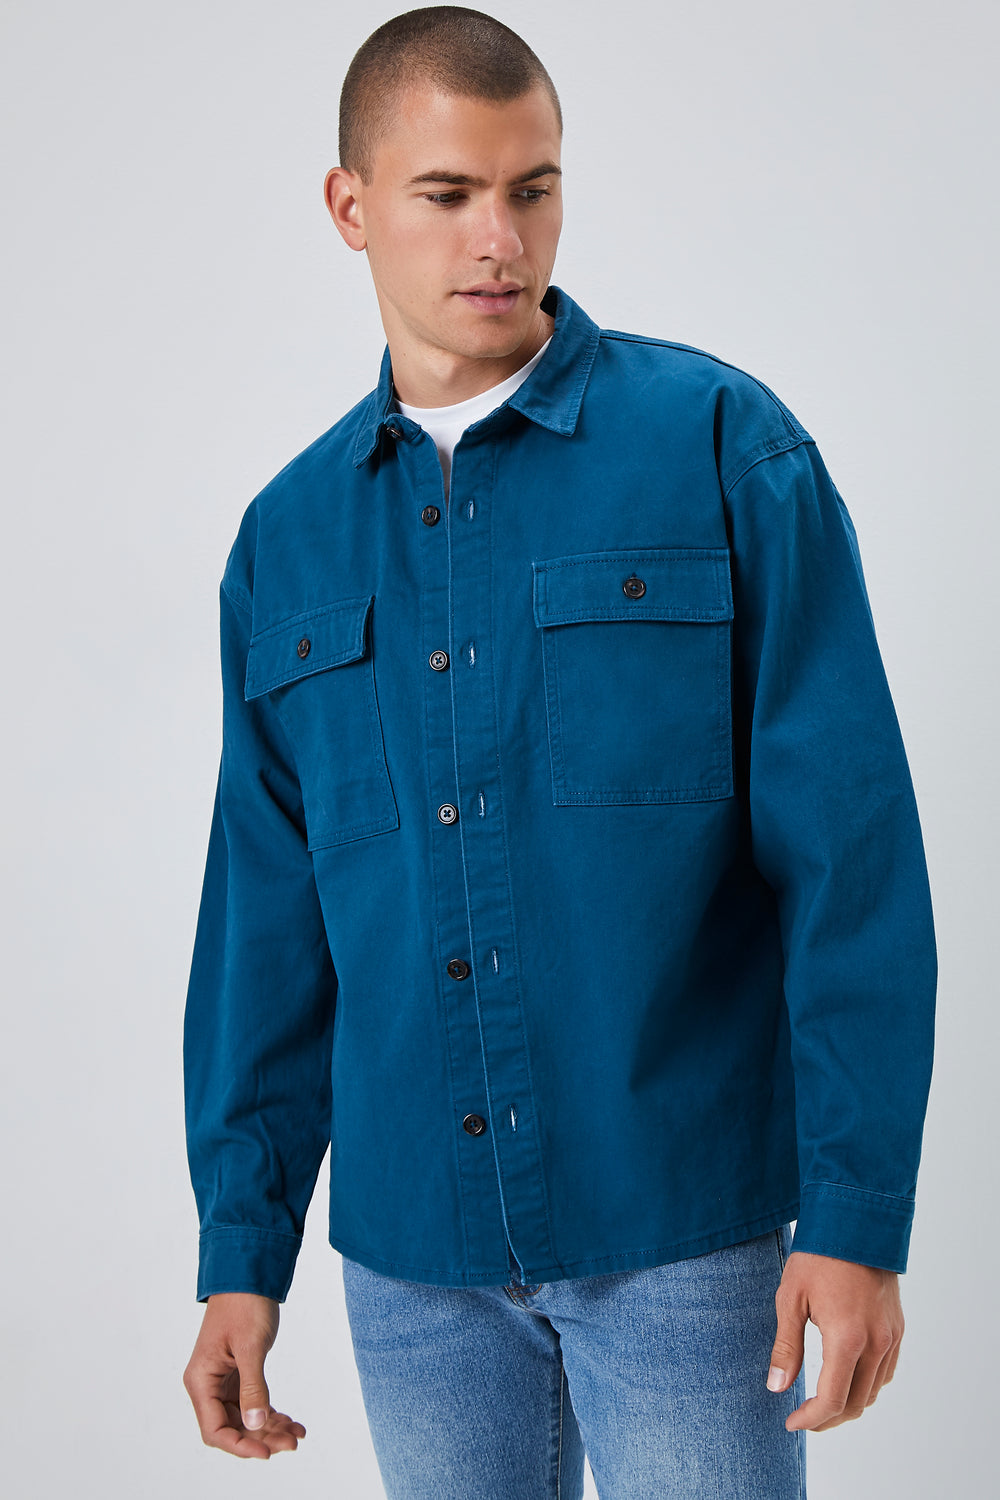 Drop-Sleeve Button Jacket Dark Blue